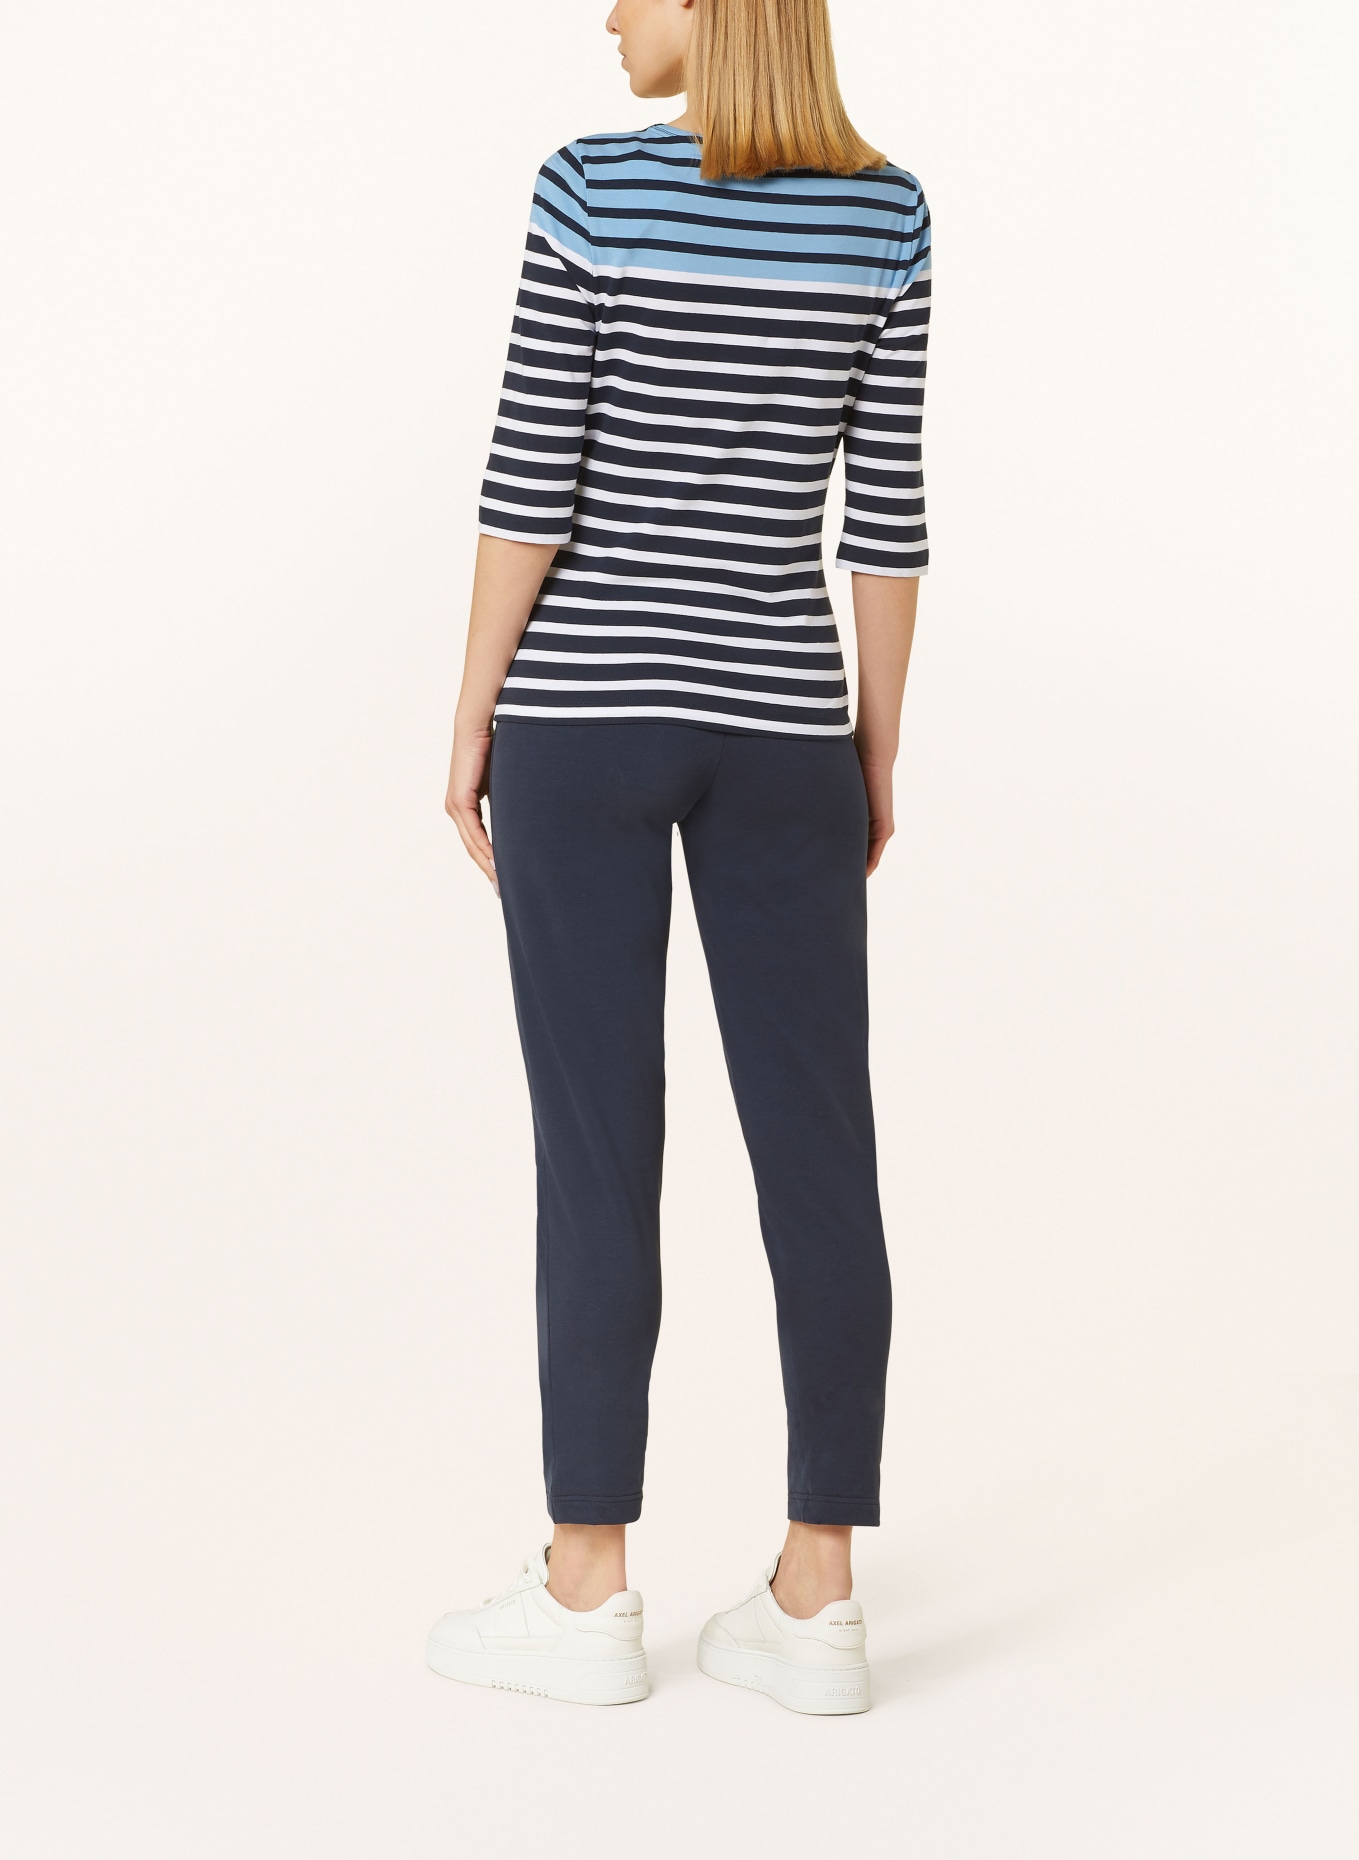 JOY sportswear Shirt CELIA with 3/4 sleeves, Color: DARK BLUE/ LIGHT BLUE/ WHITE (Image 3)